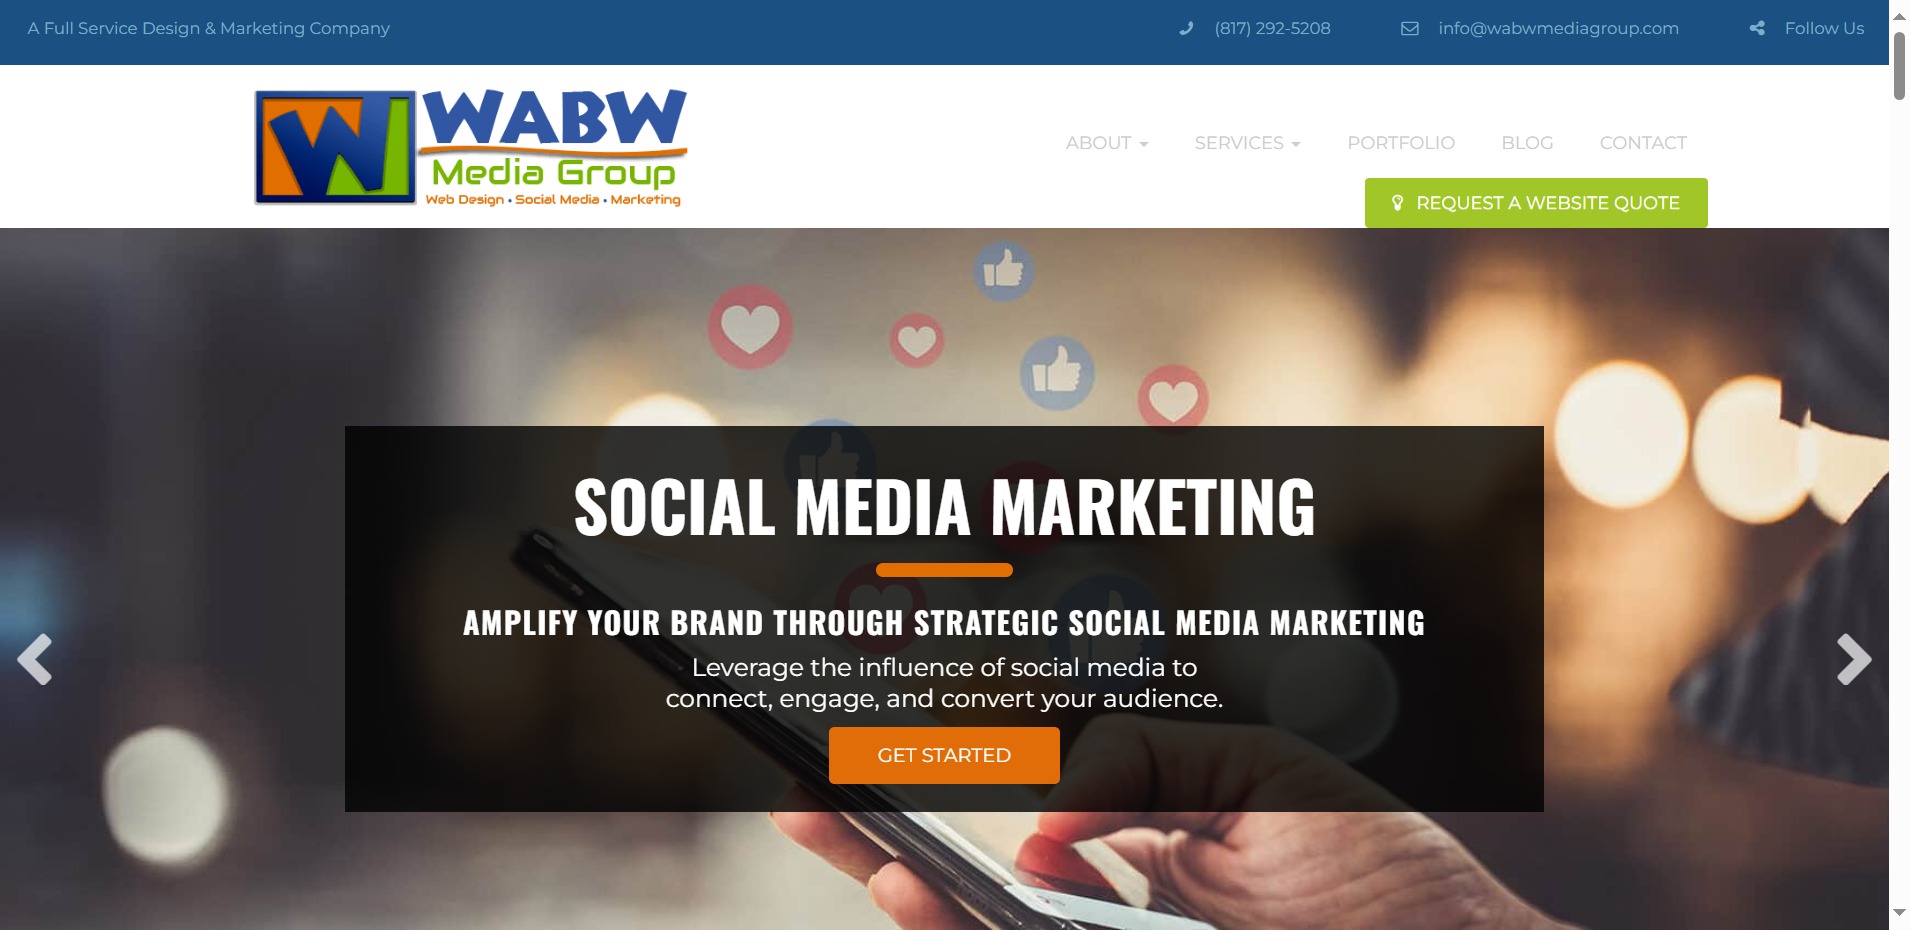 WABW Media Group, Inc